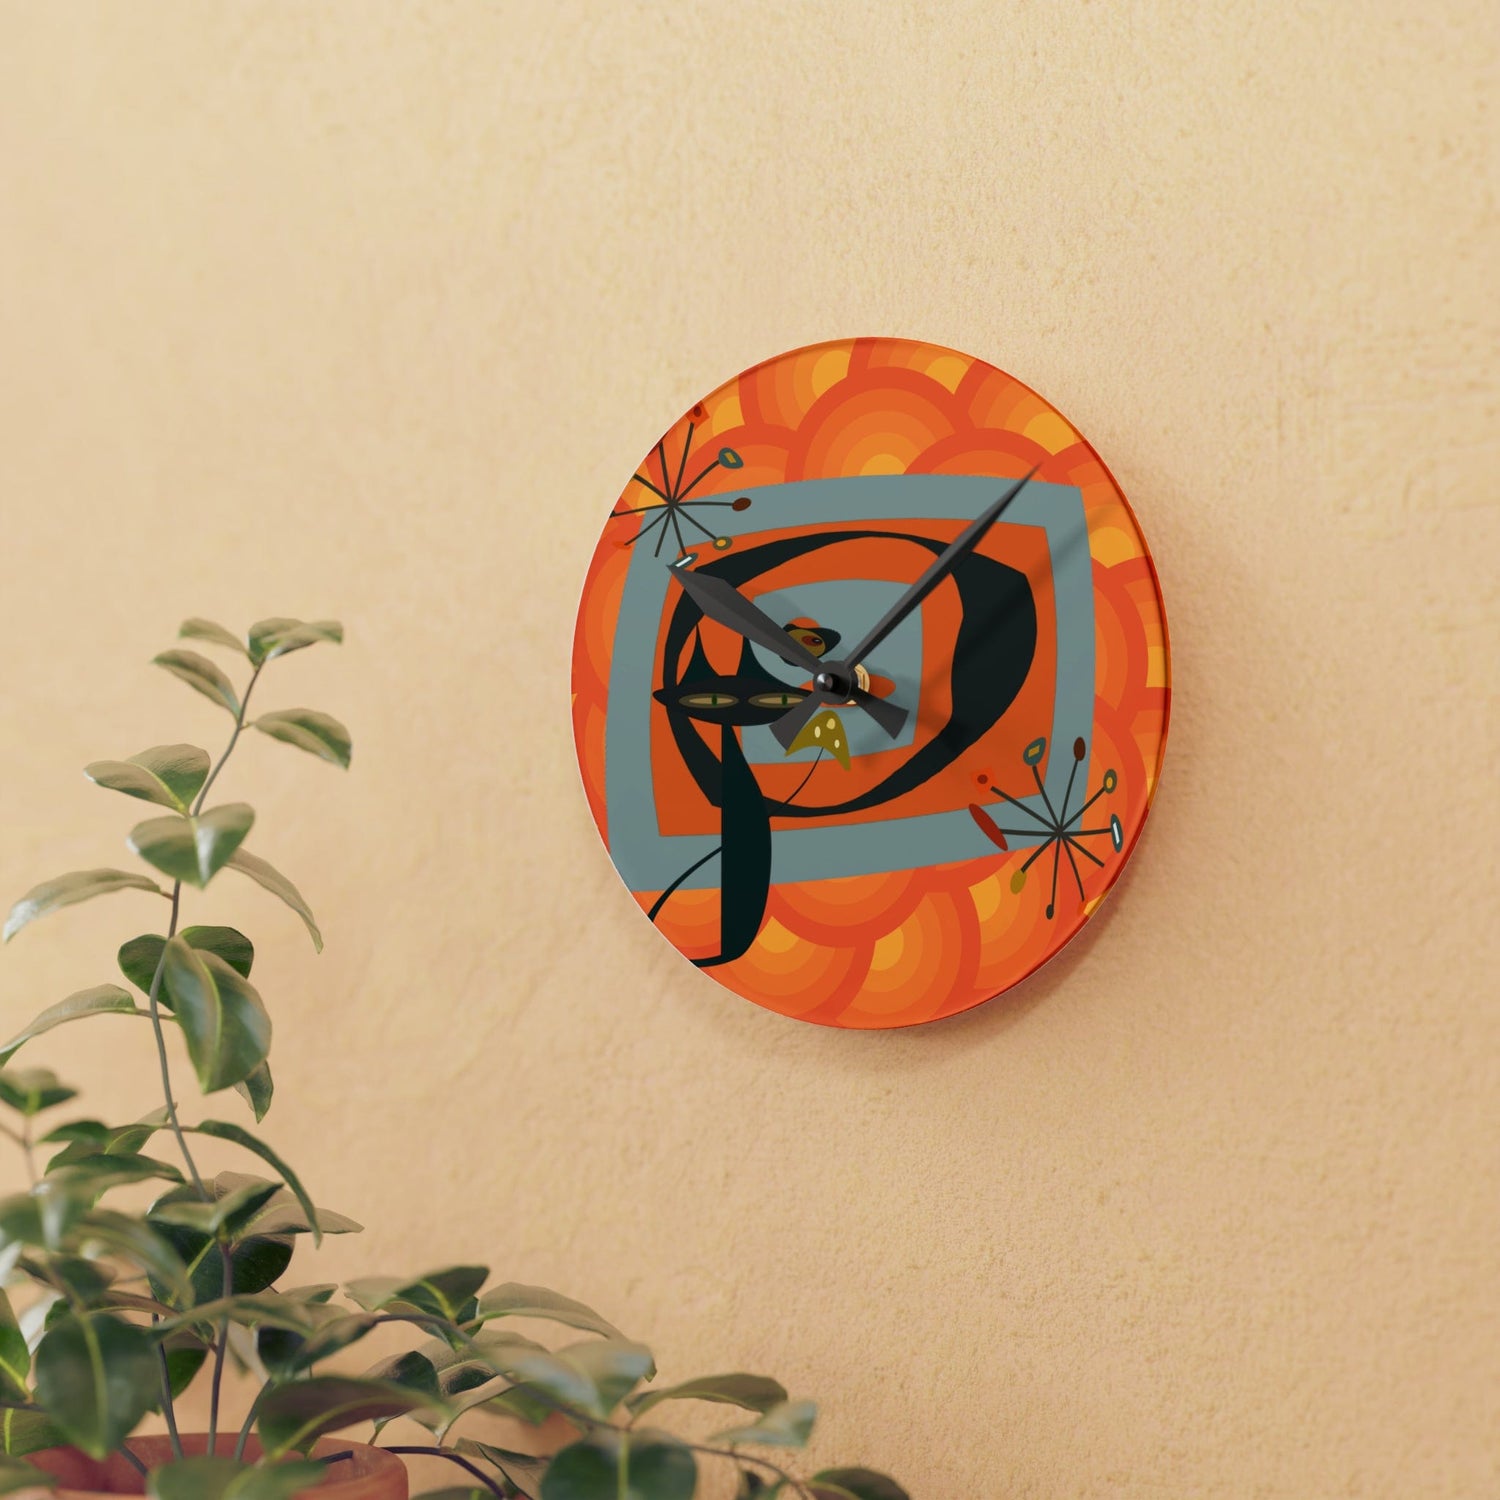 Mid Century Modern Wall Clock, Atomic Kitschy Cat, Orange Groovy Retro Acrylic Wall Clock Home Decor